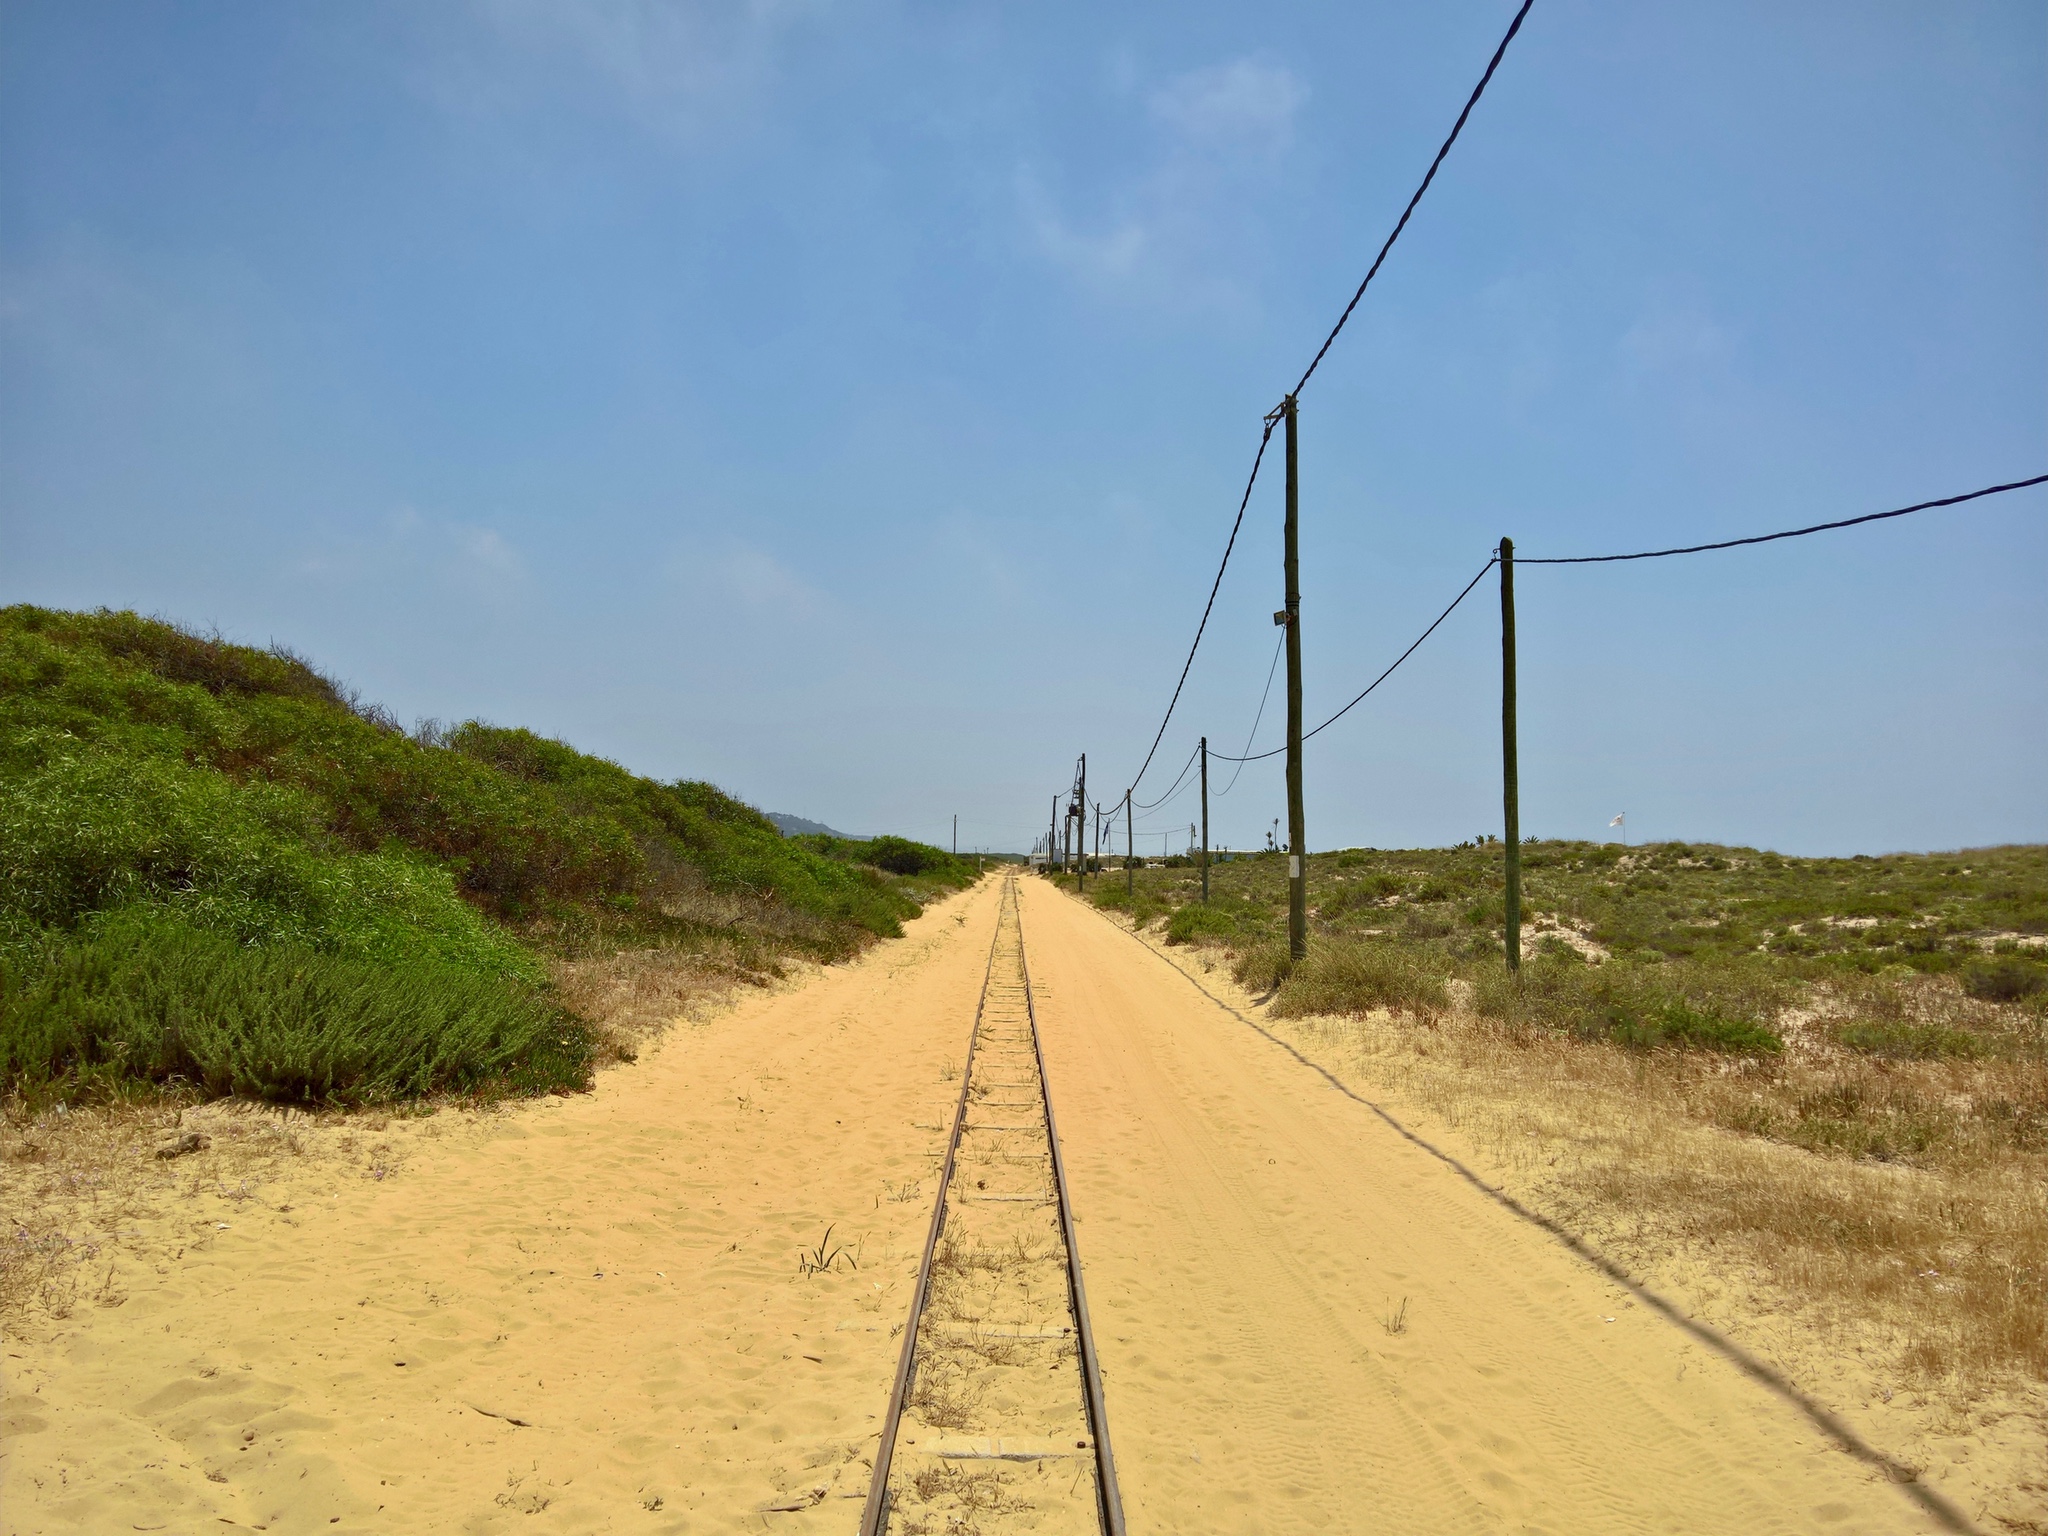 A railway near the beach